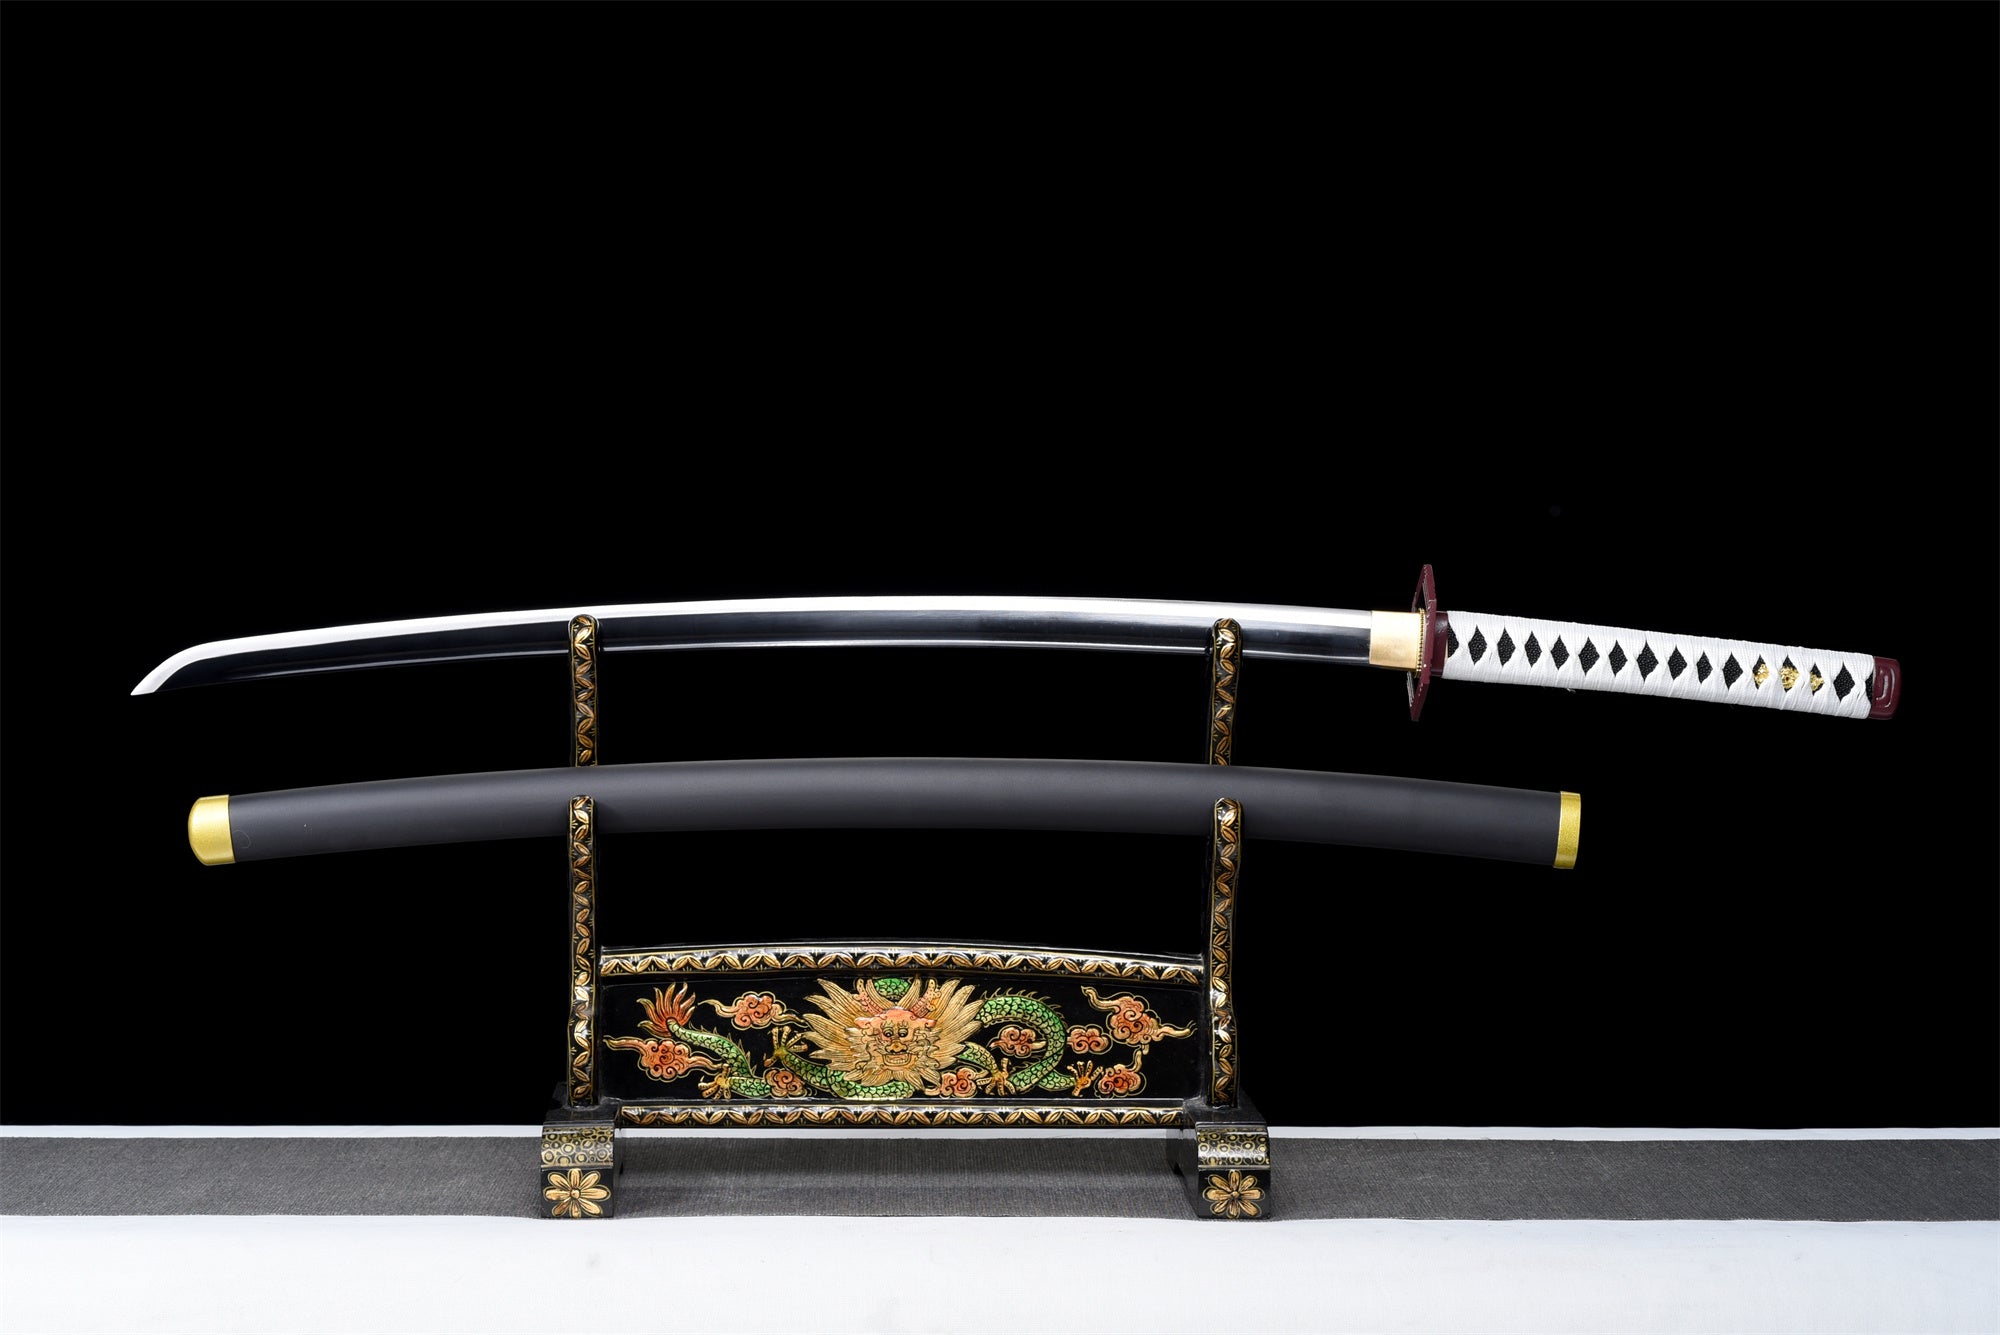 Anime Sword,Roasted Black Blade,Anime Cosplay,Japanese Samurai Sword,Real Handmade anime Katana,High-carbon steel,Full Tang